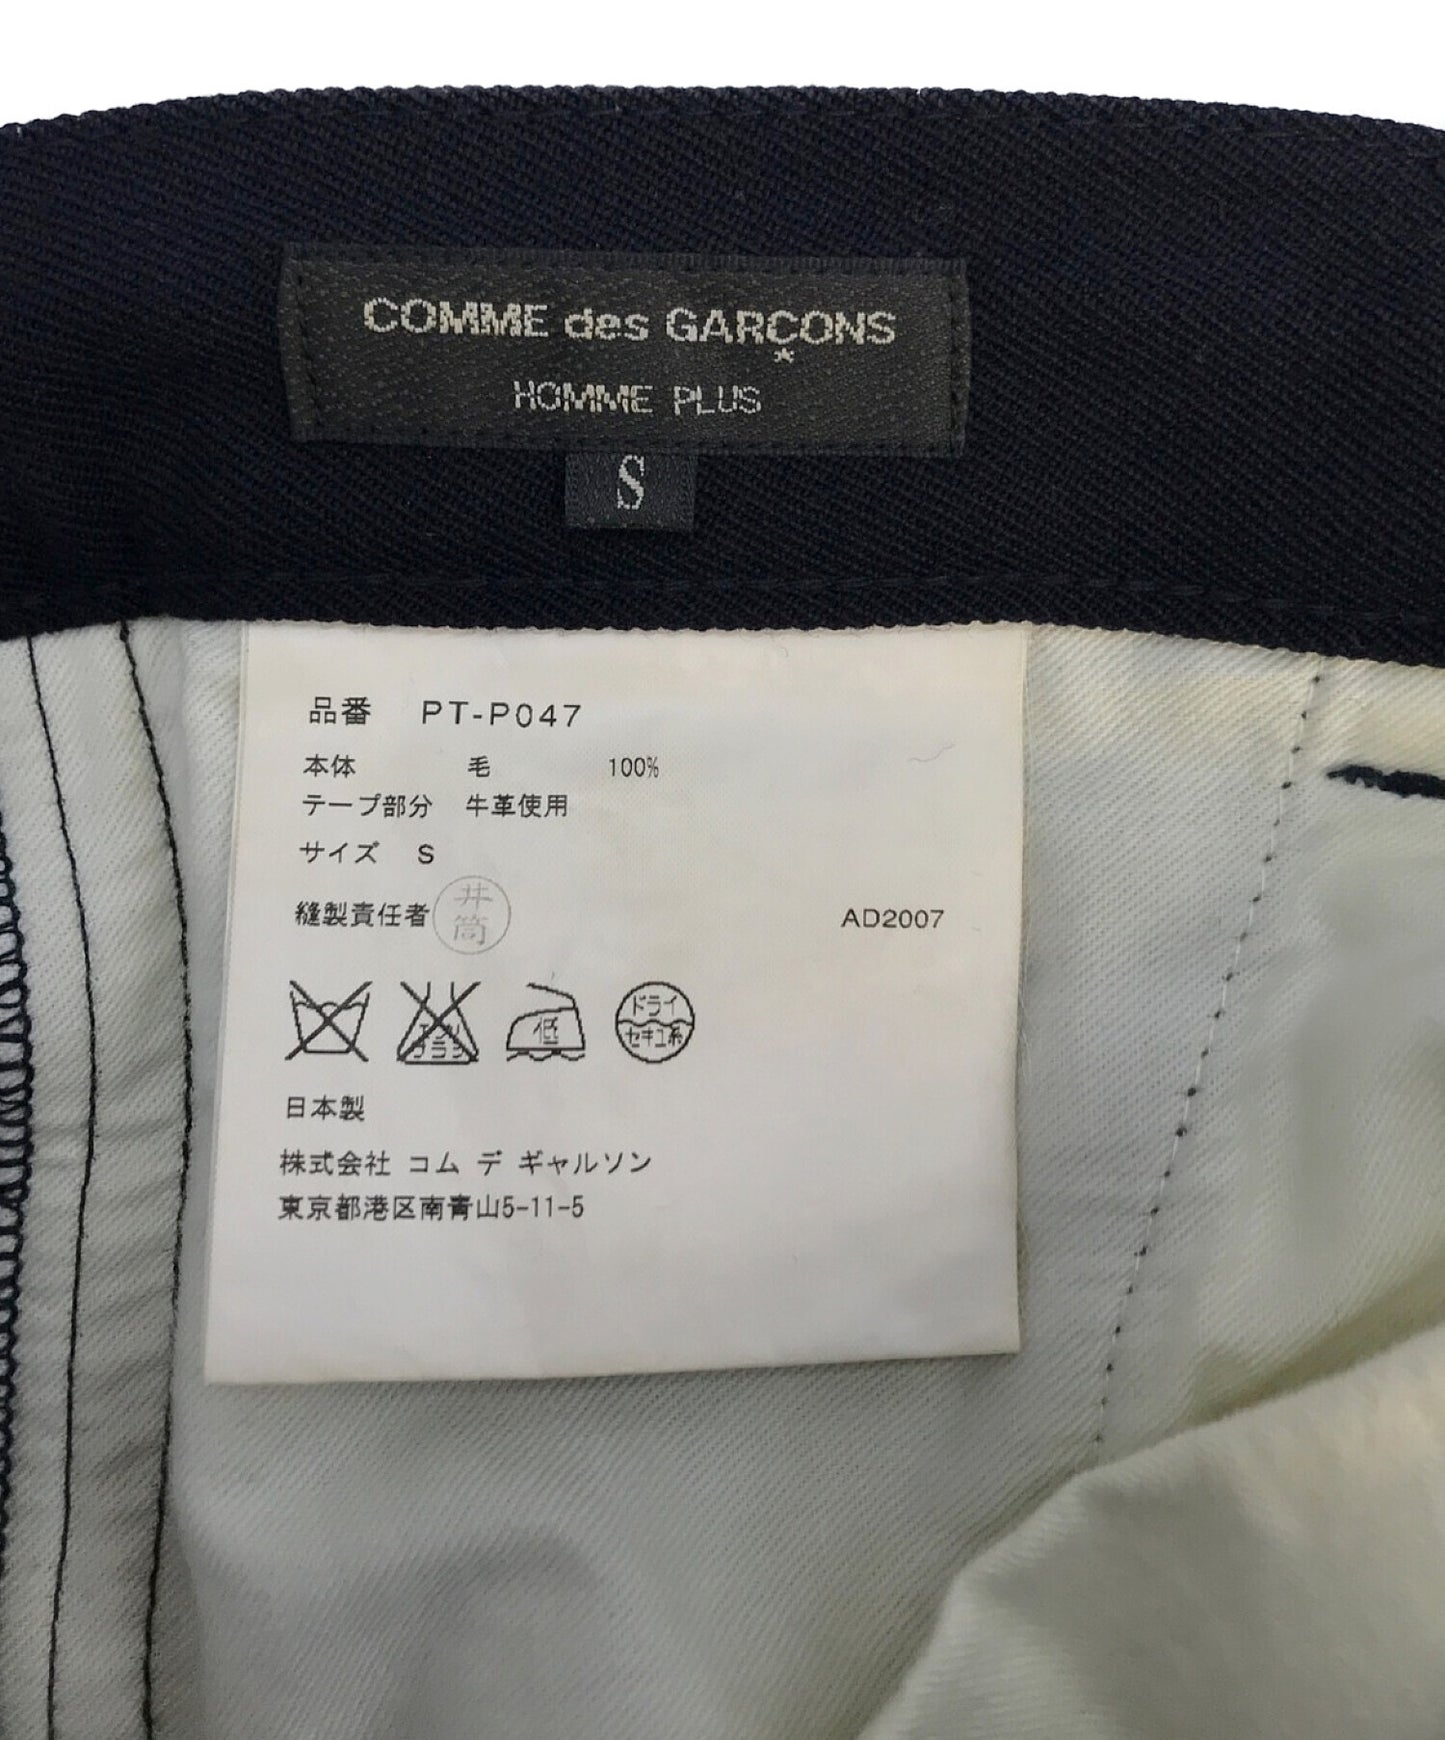 [Pre-owned] COMME des GARCONS Homme Plus Leather side chapter pants PT-P047